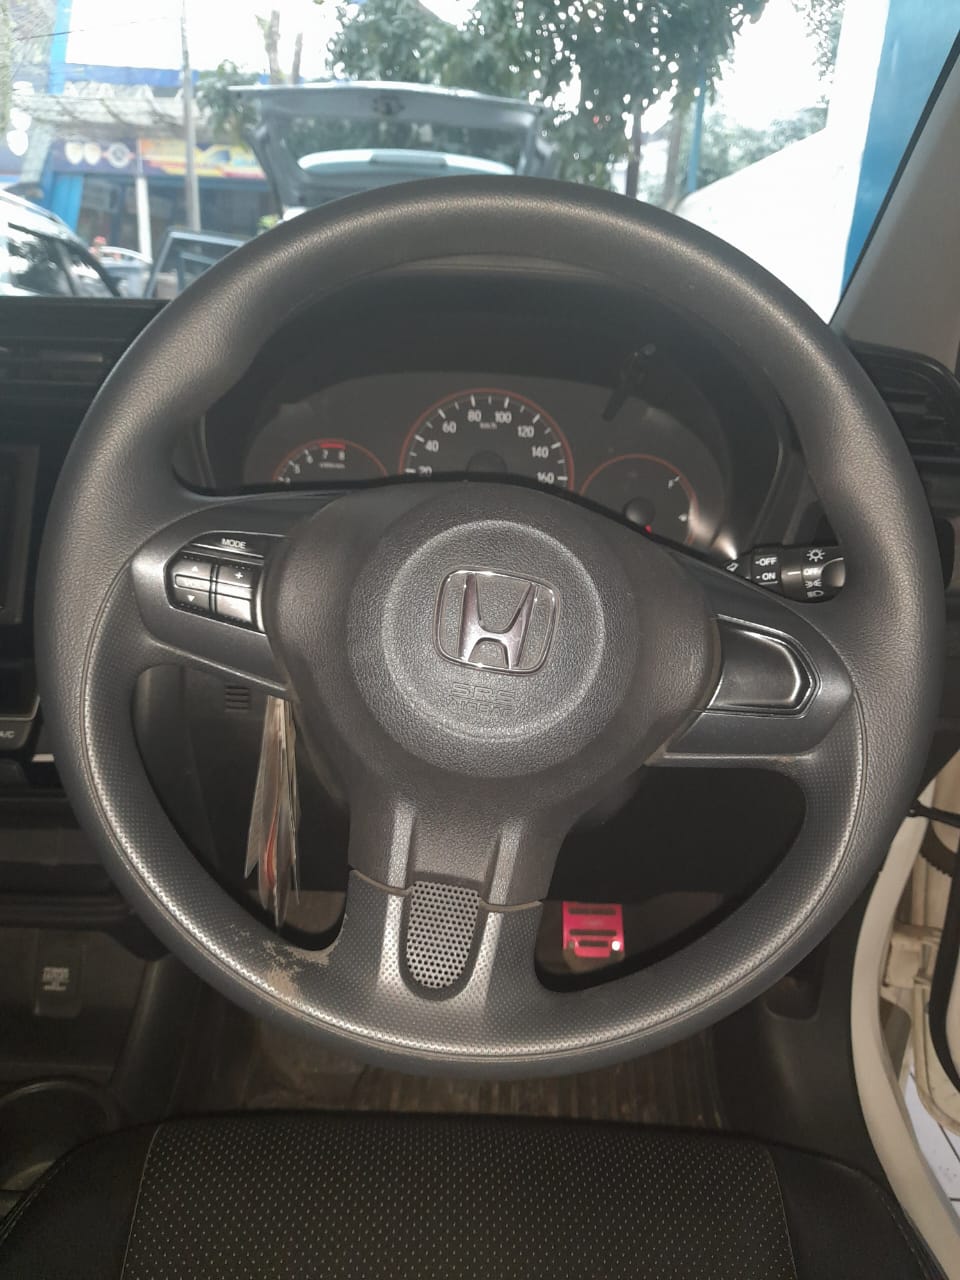 HONDA MOBILIO 1.5L RS AT 2016